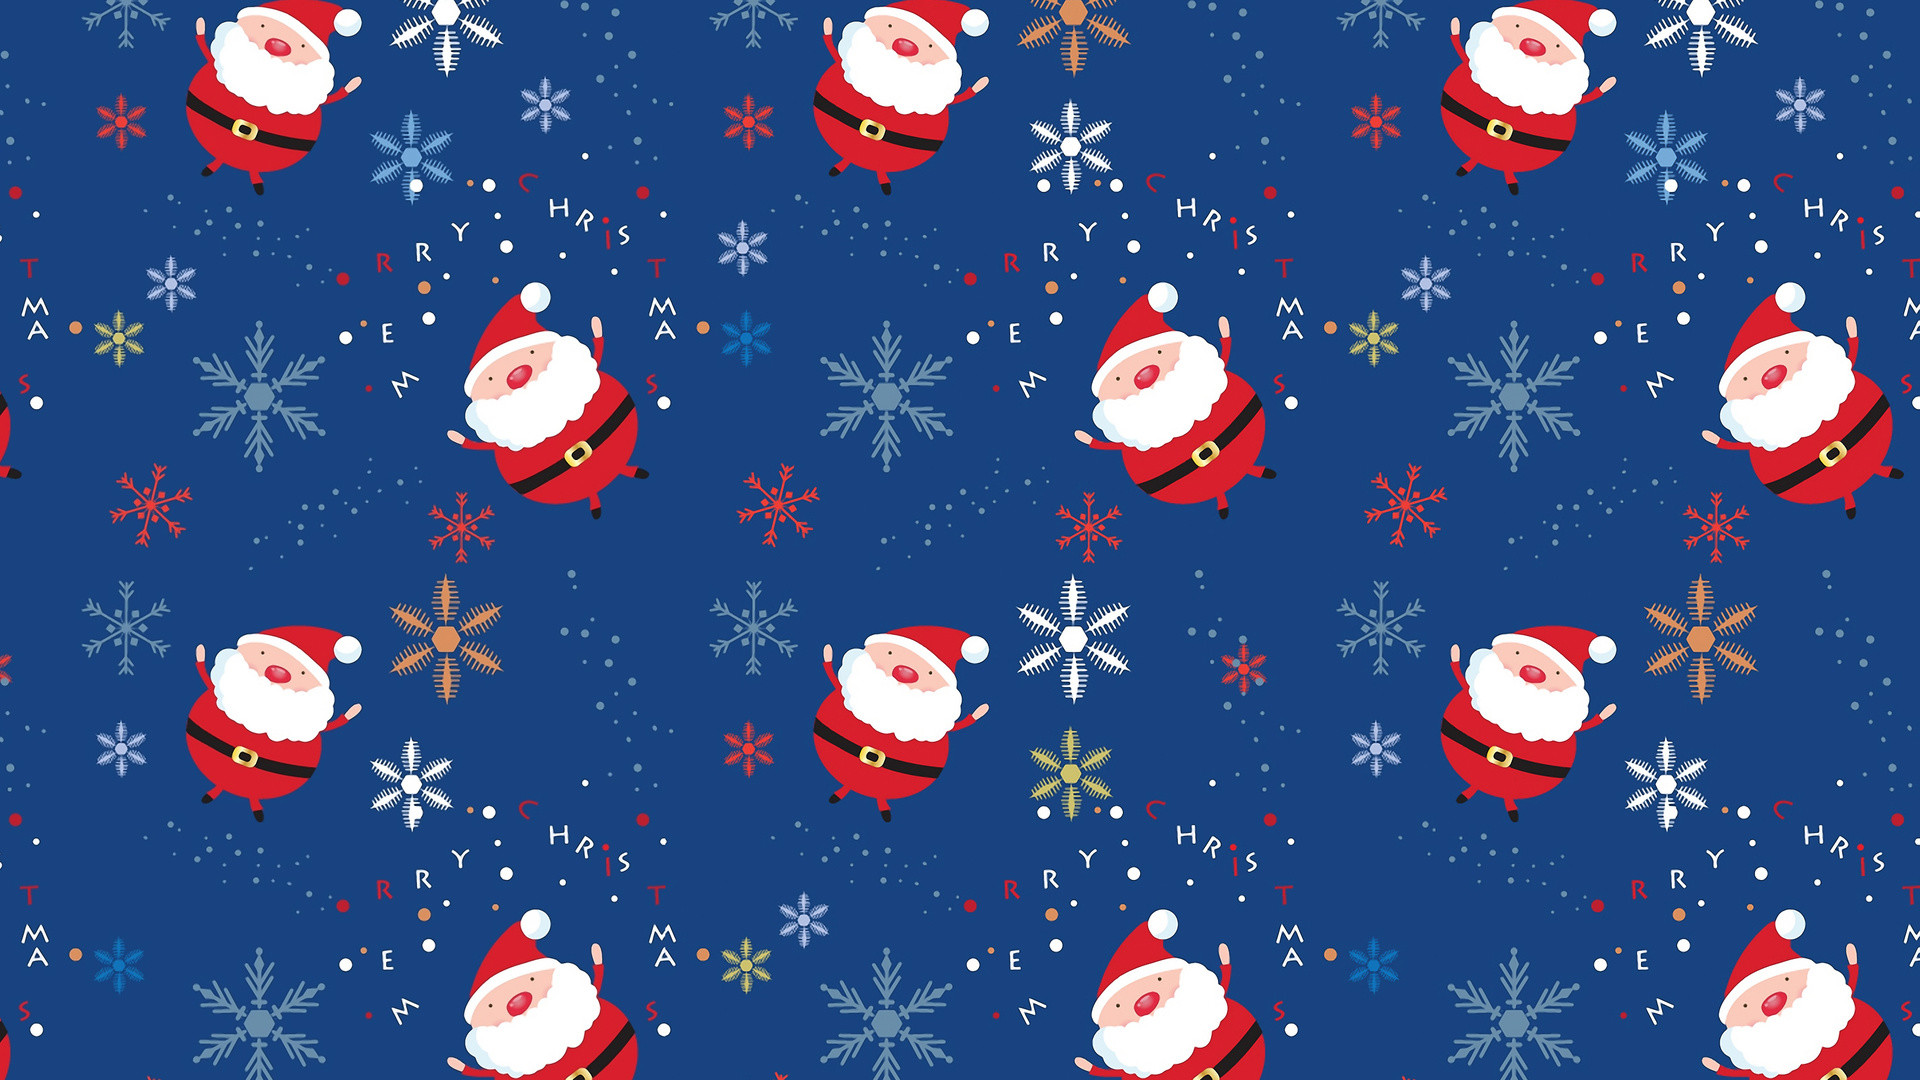 Cute Christmas Desktop Background Image